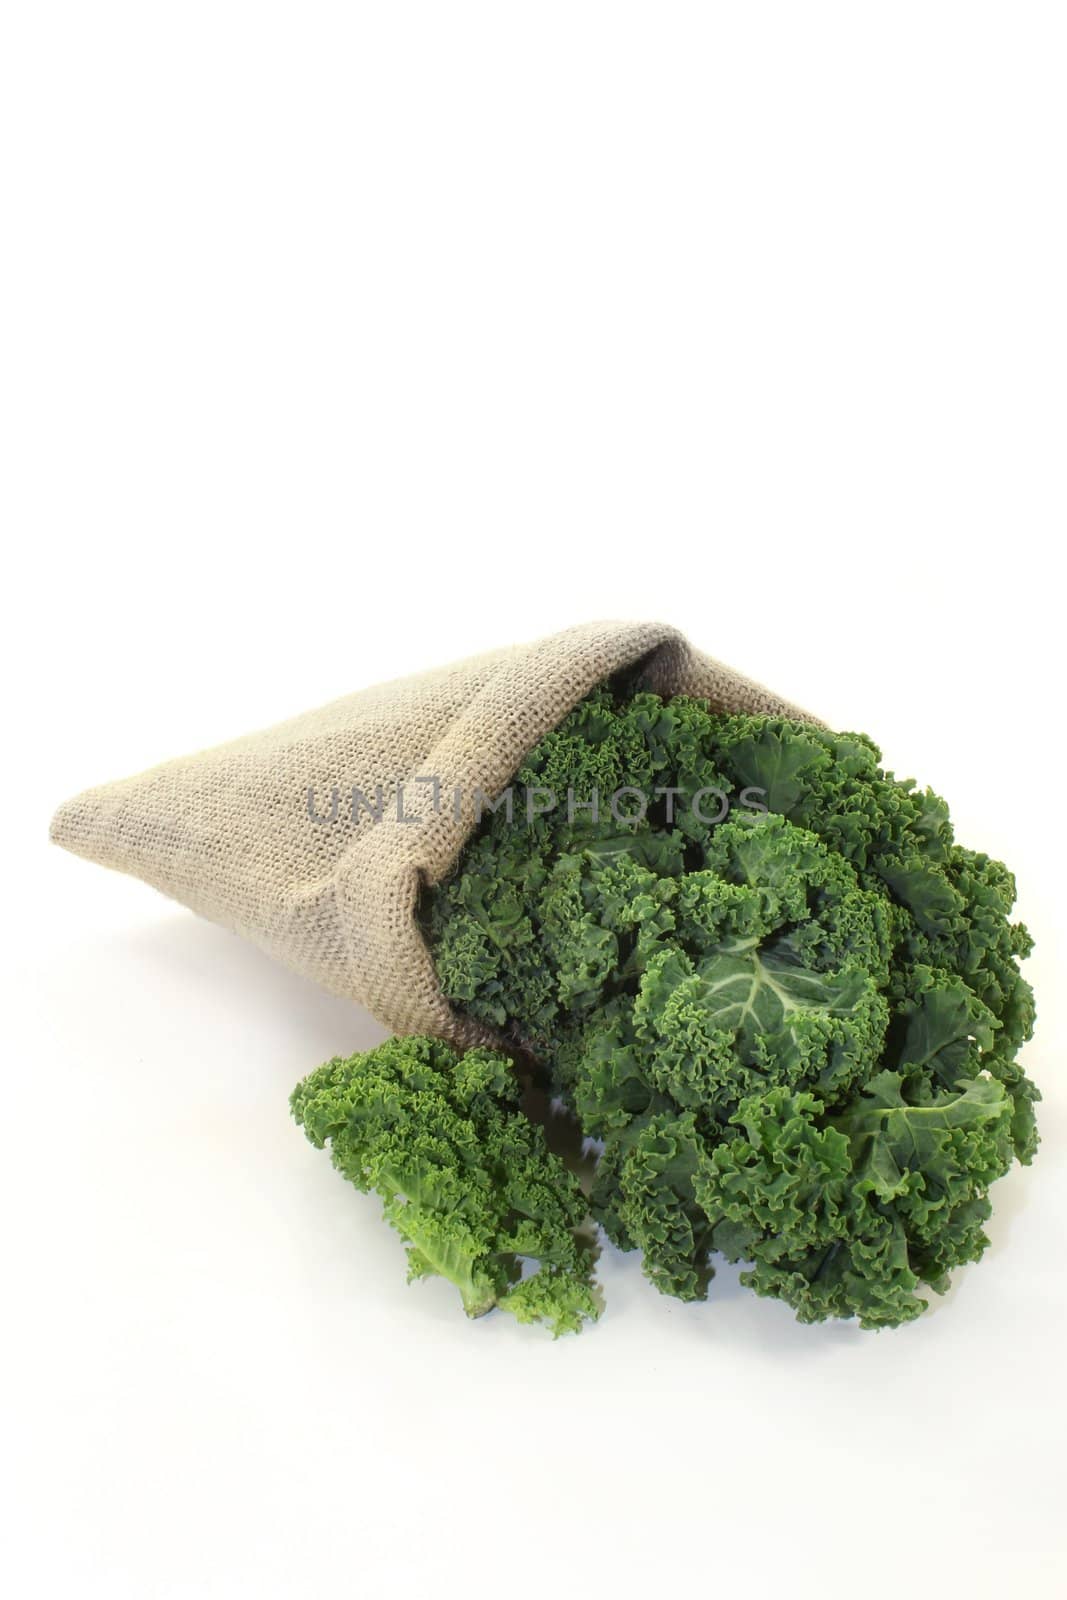 fresh green kale on a white background